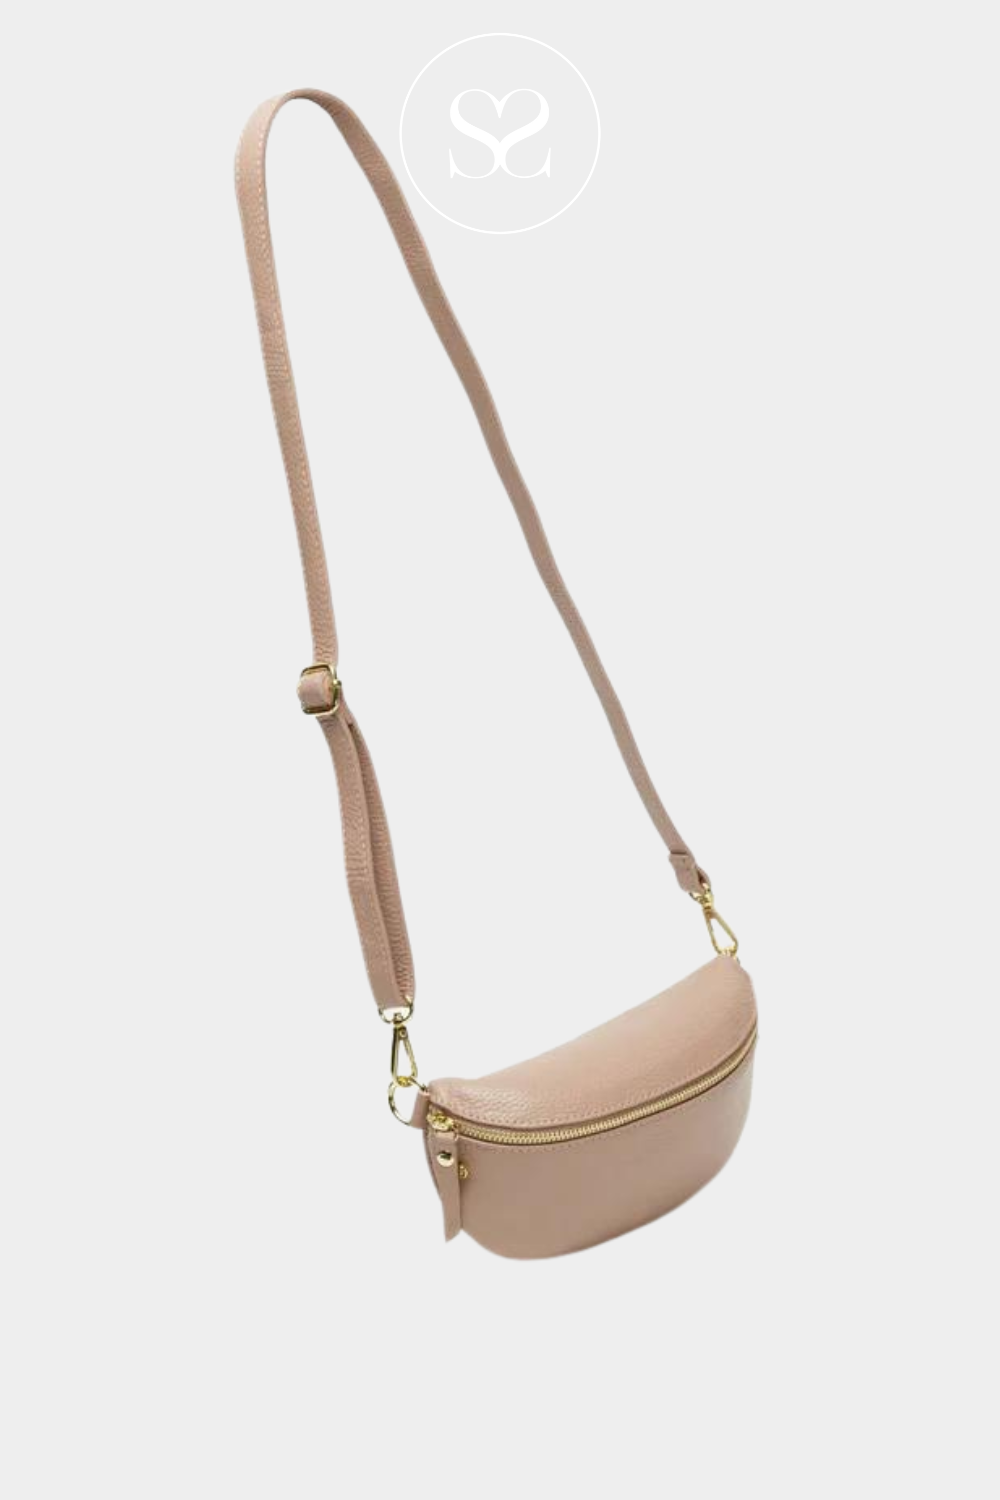 Pink leather crossbody / sling bag